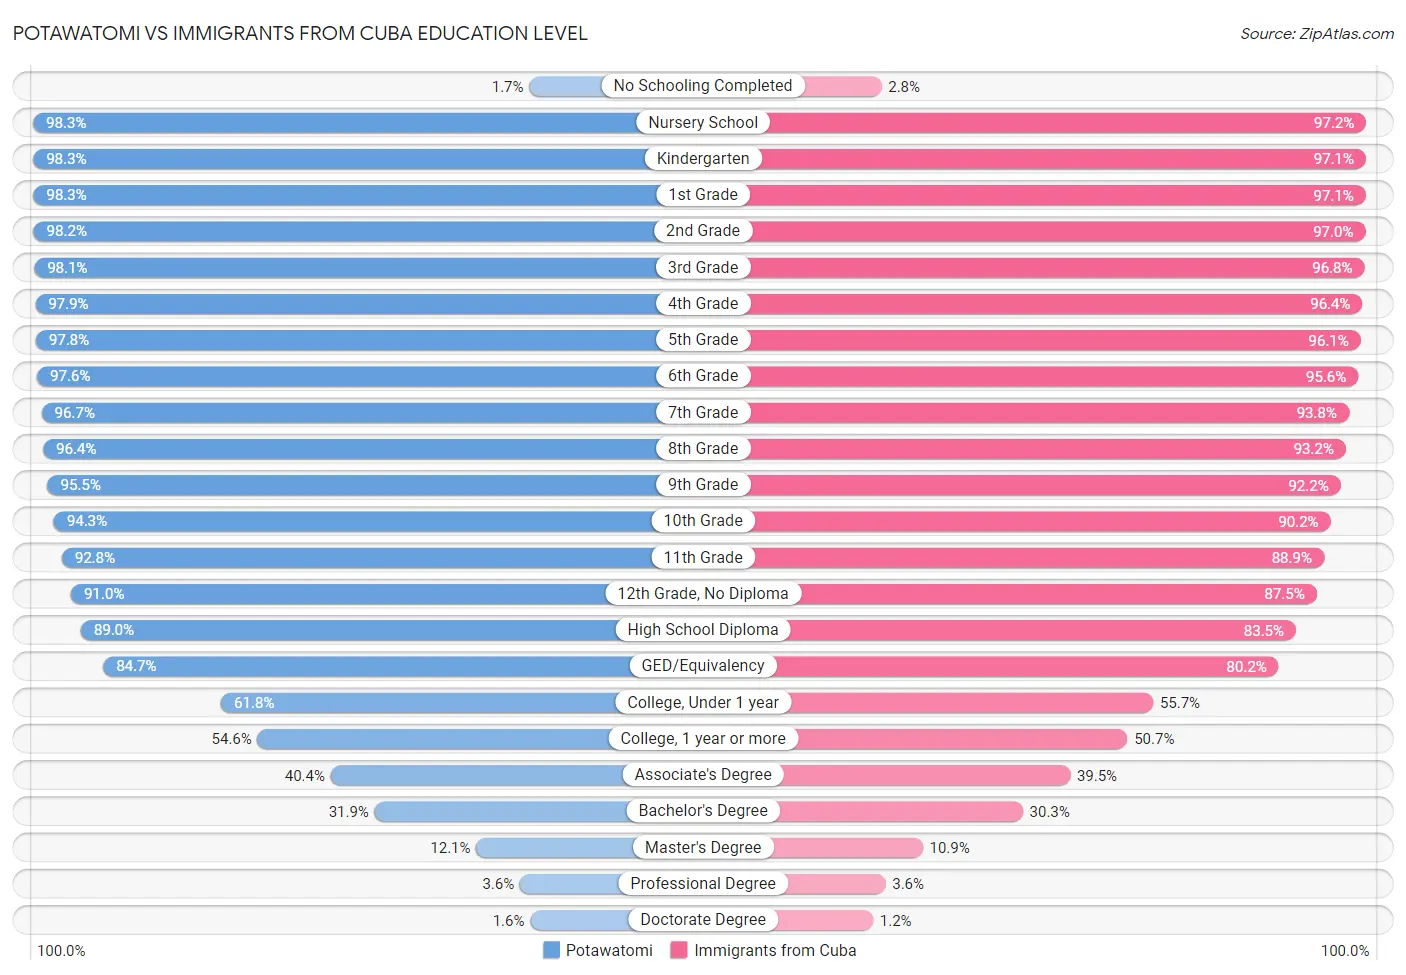 Potawatomi vs Immigrants from Cuba Education Level